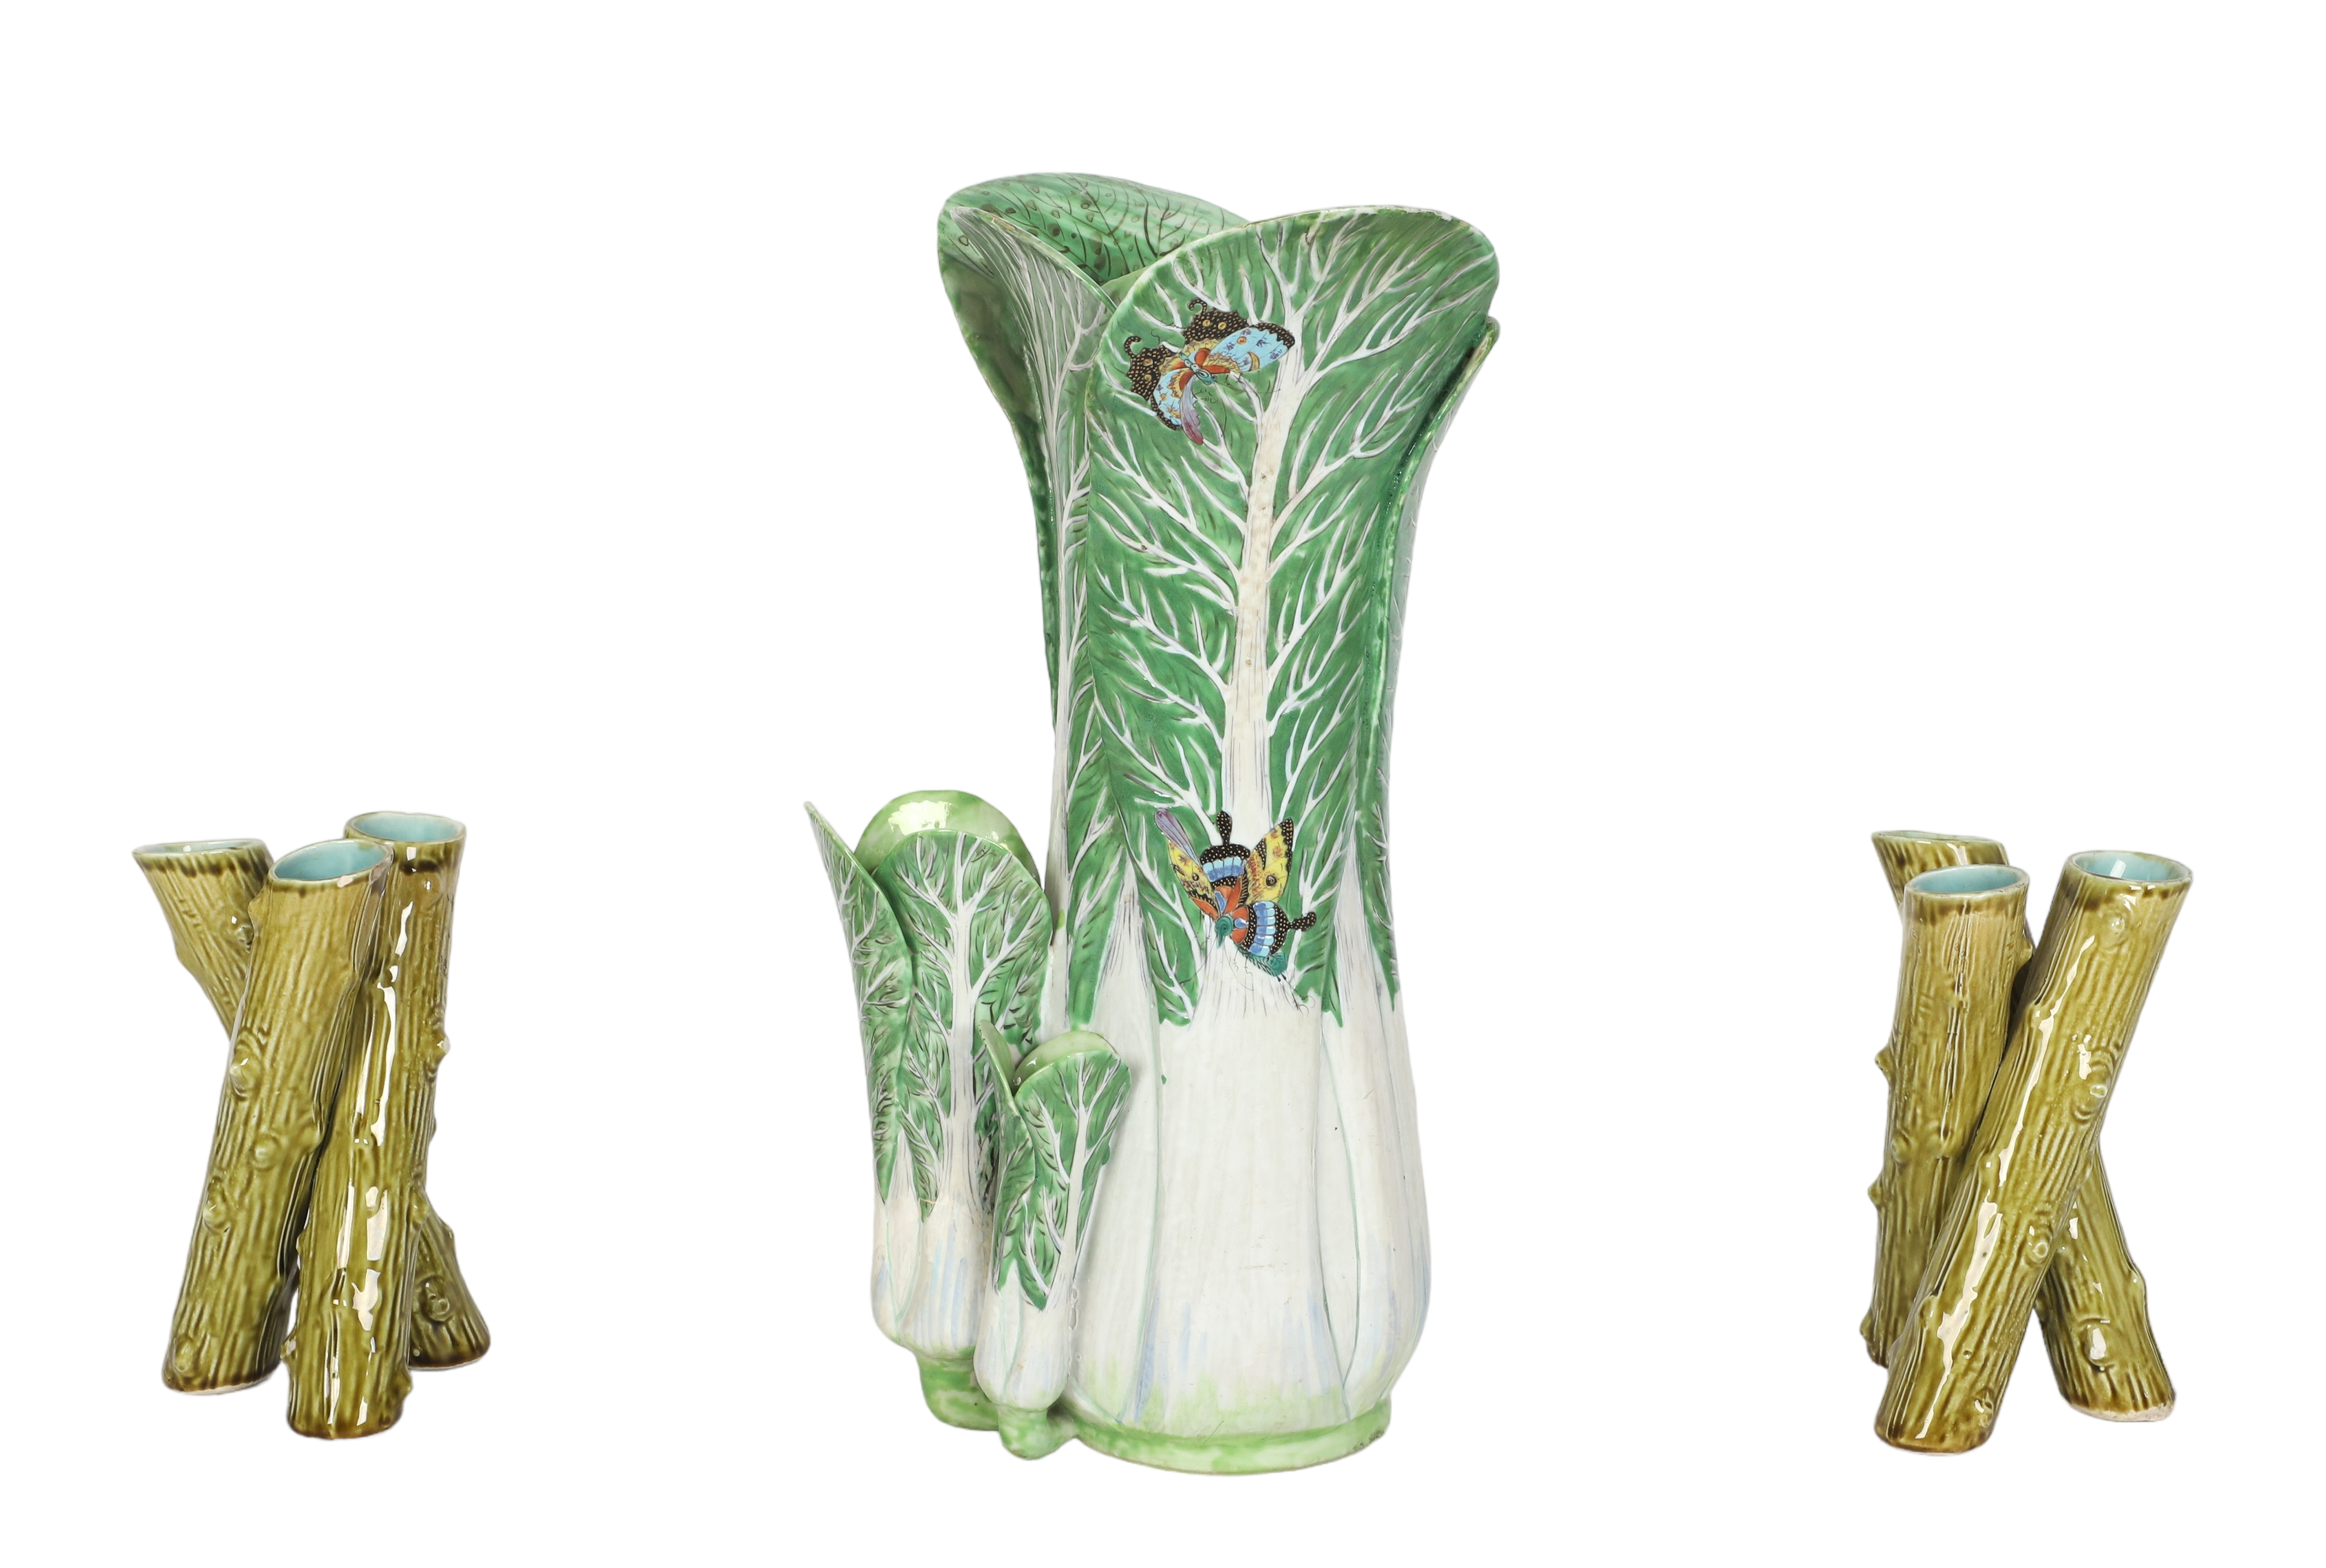  3 Chinese porcelain figural vases  3b3c45